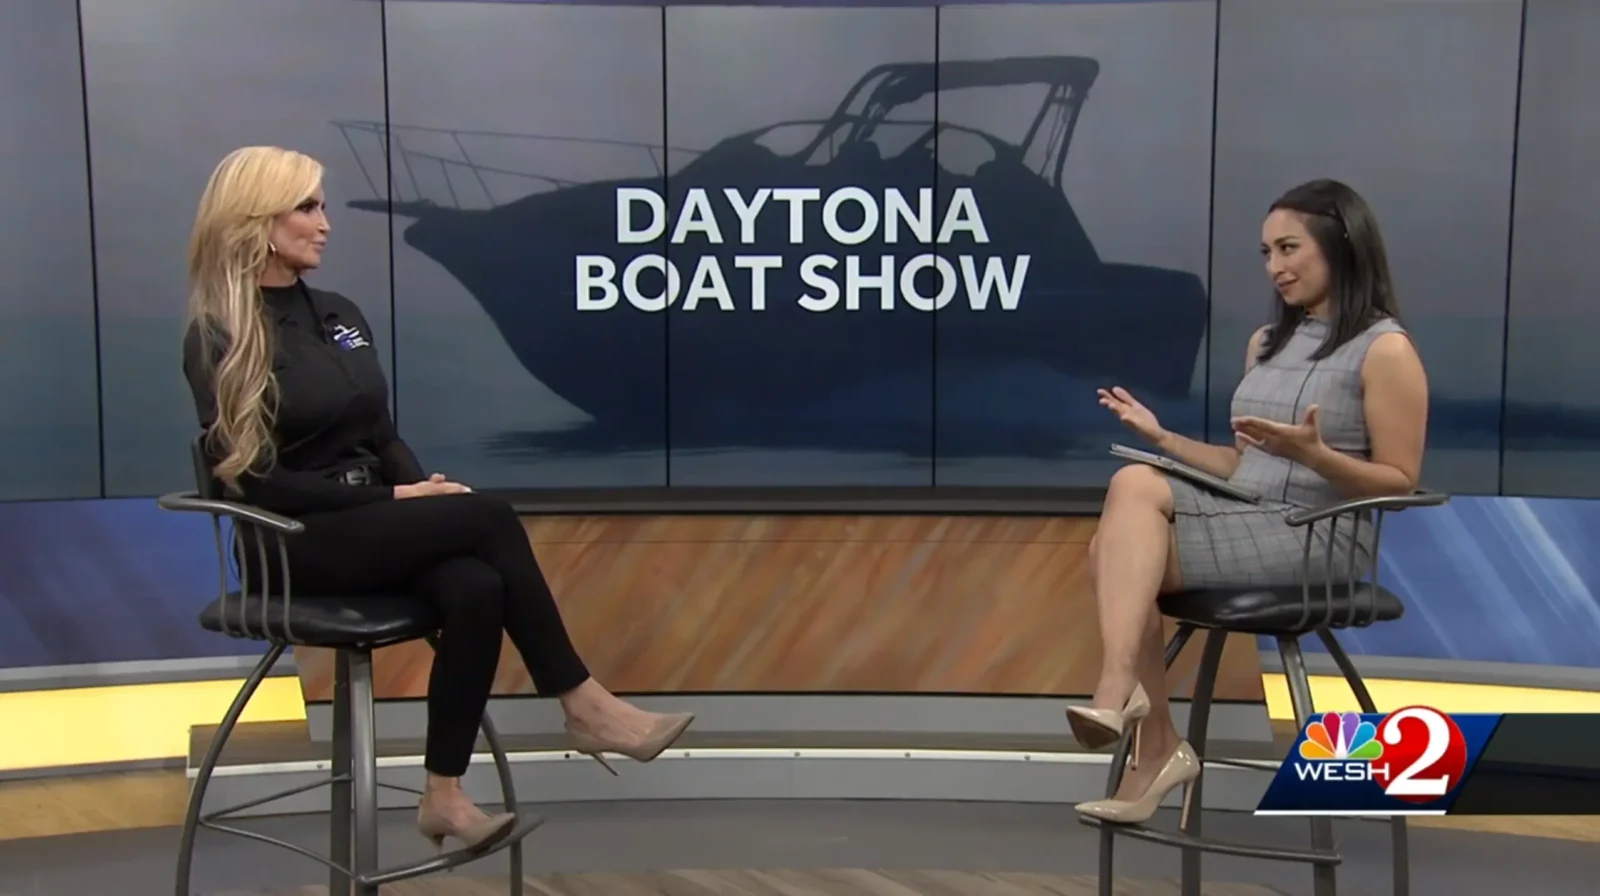 Daytona-boat-show-wesh-2-news3